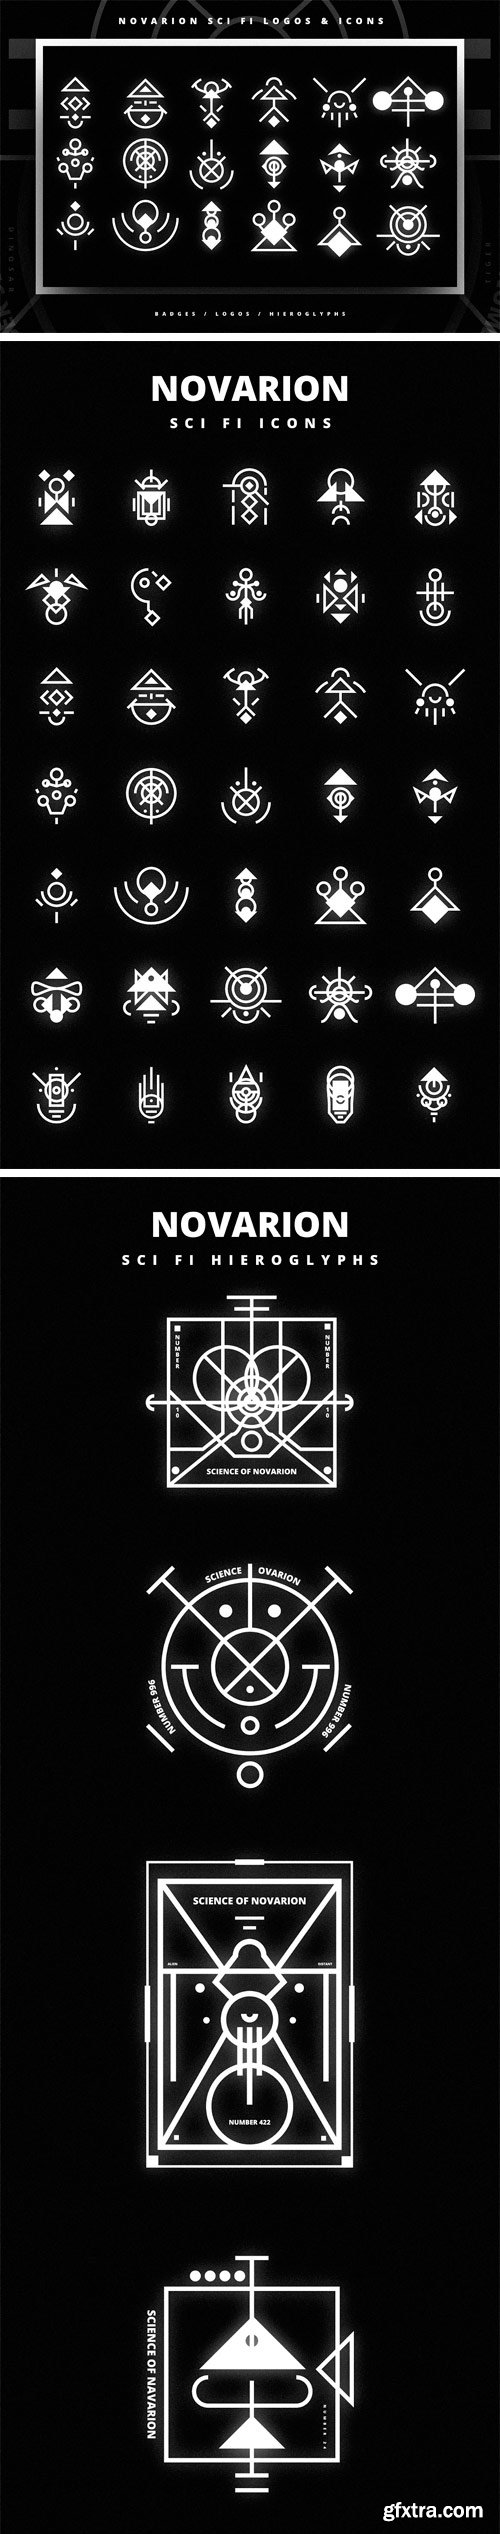 CM 1541007 - Novarion Sci Fi Logos & Icons